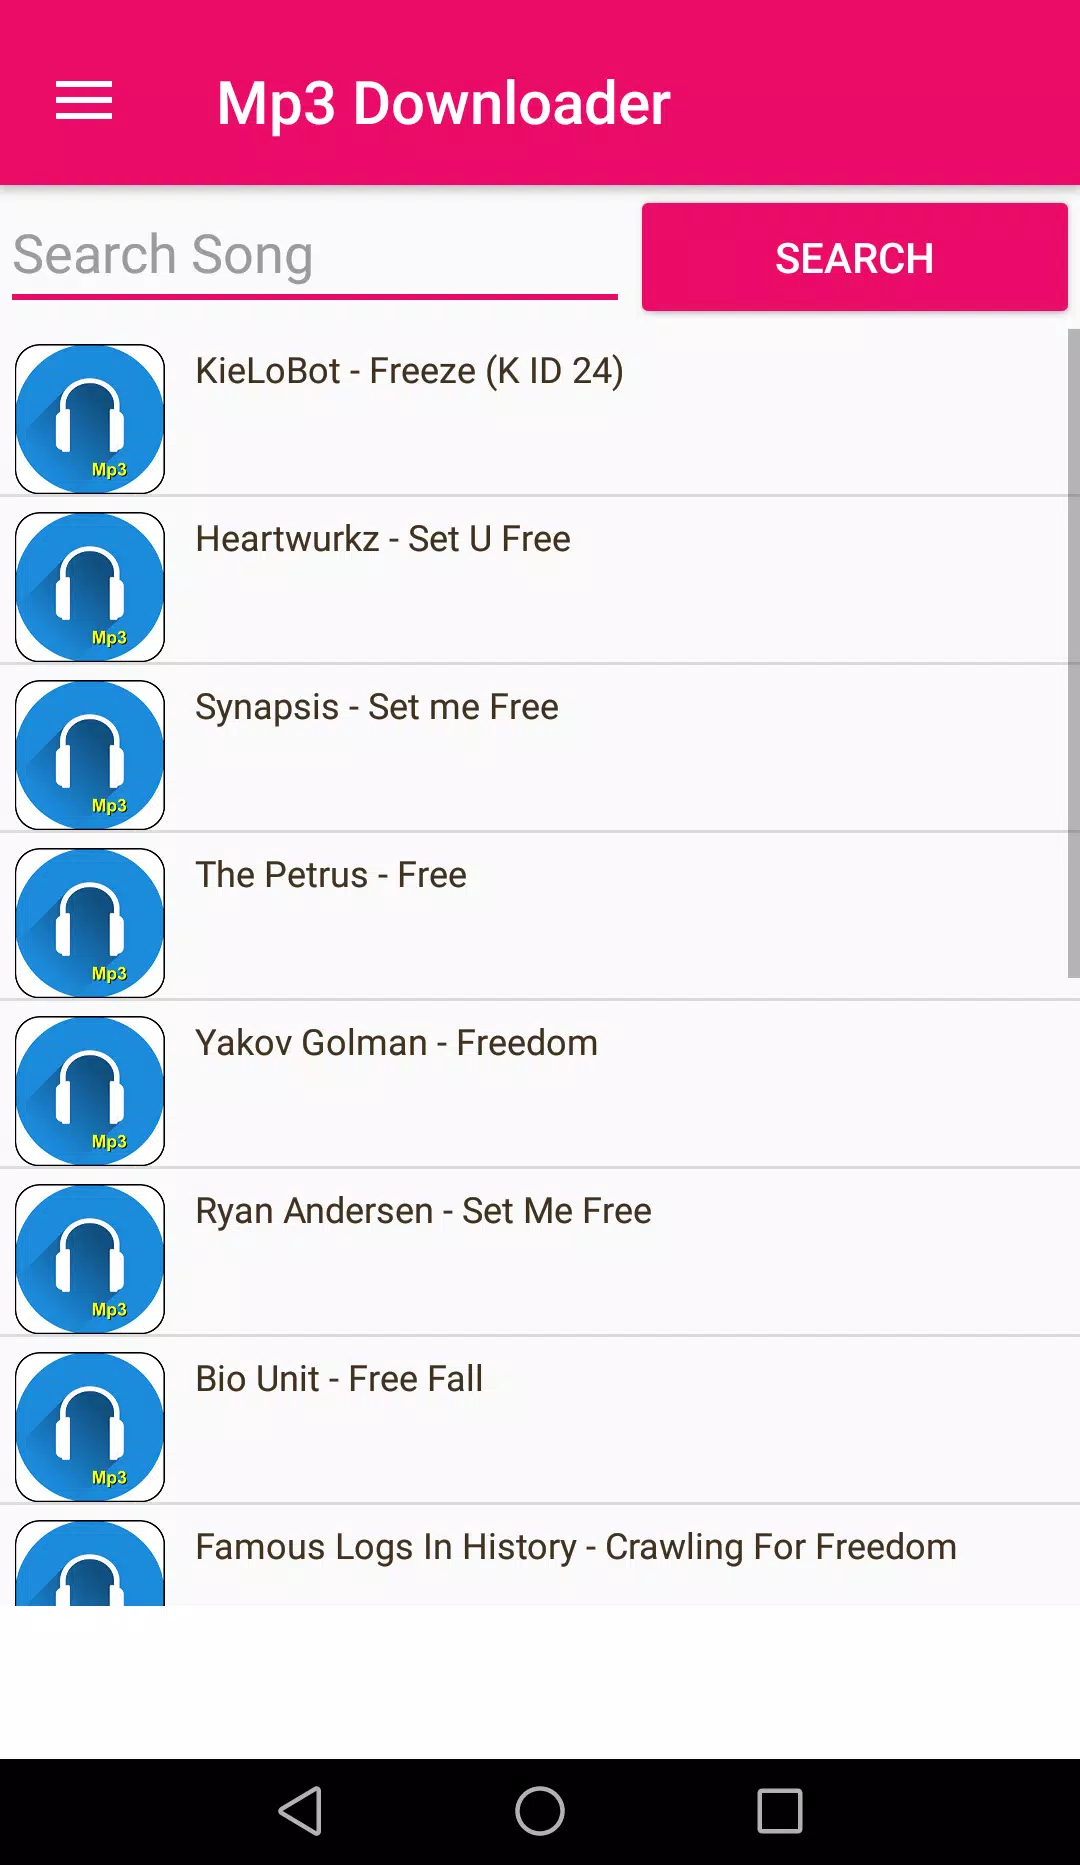 Mp3 Music Downloader Free Descargar Musica Gratis for Android - APK Download